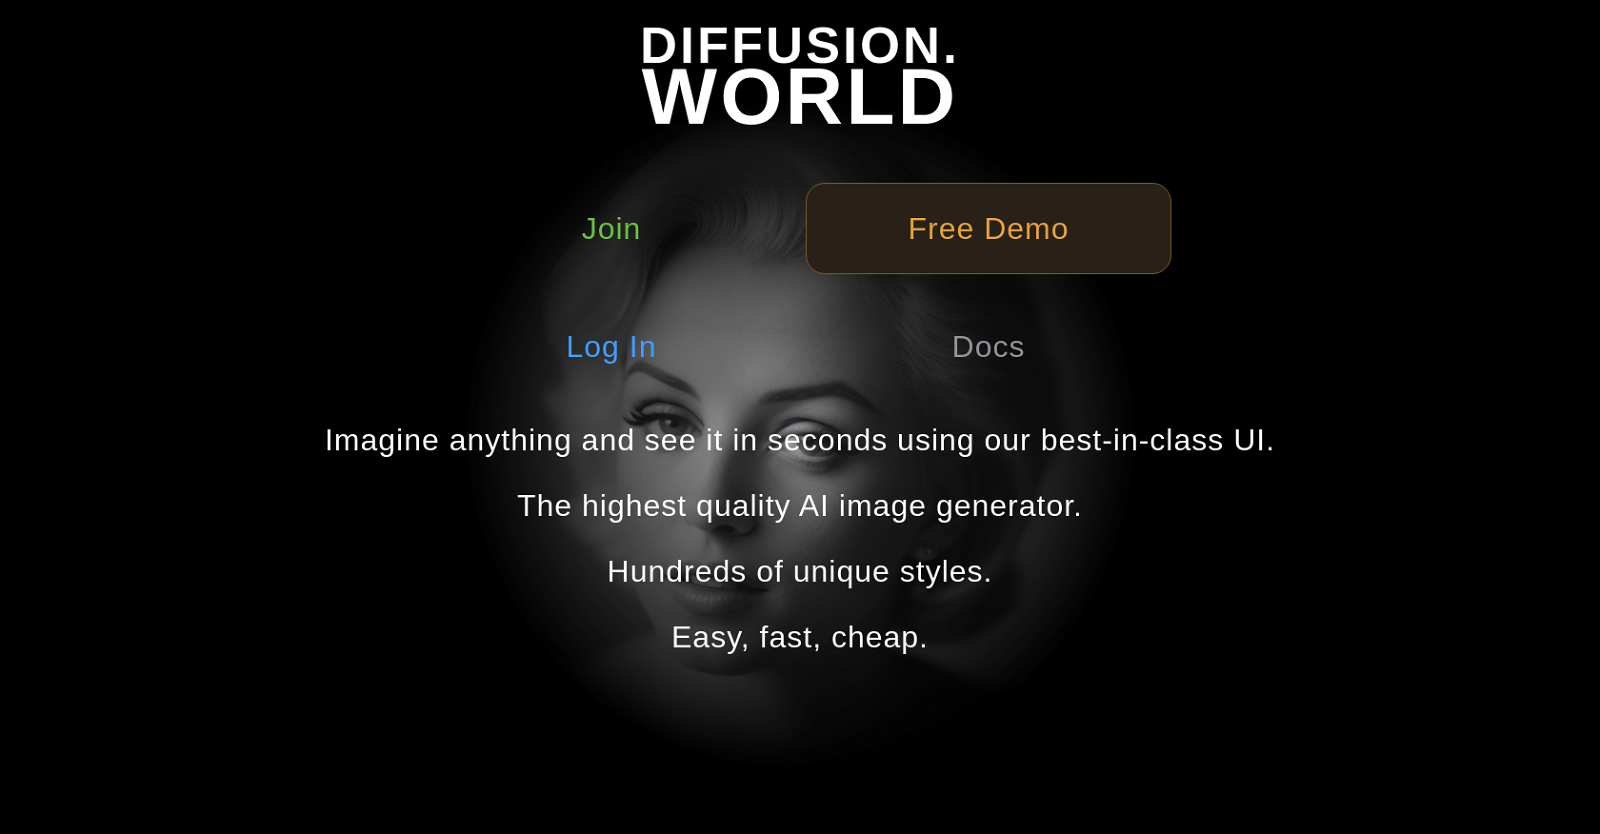 Diffusion World website